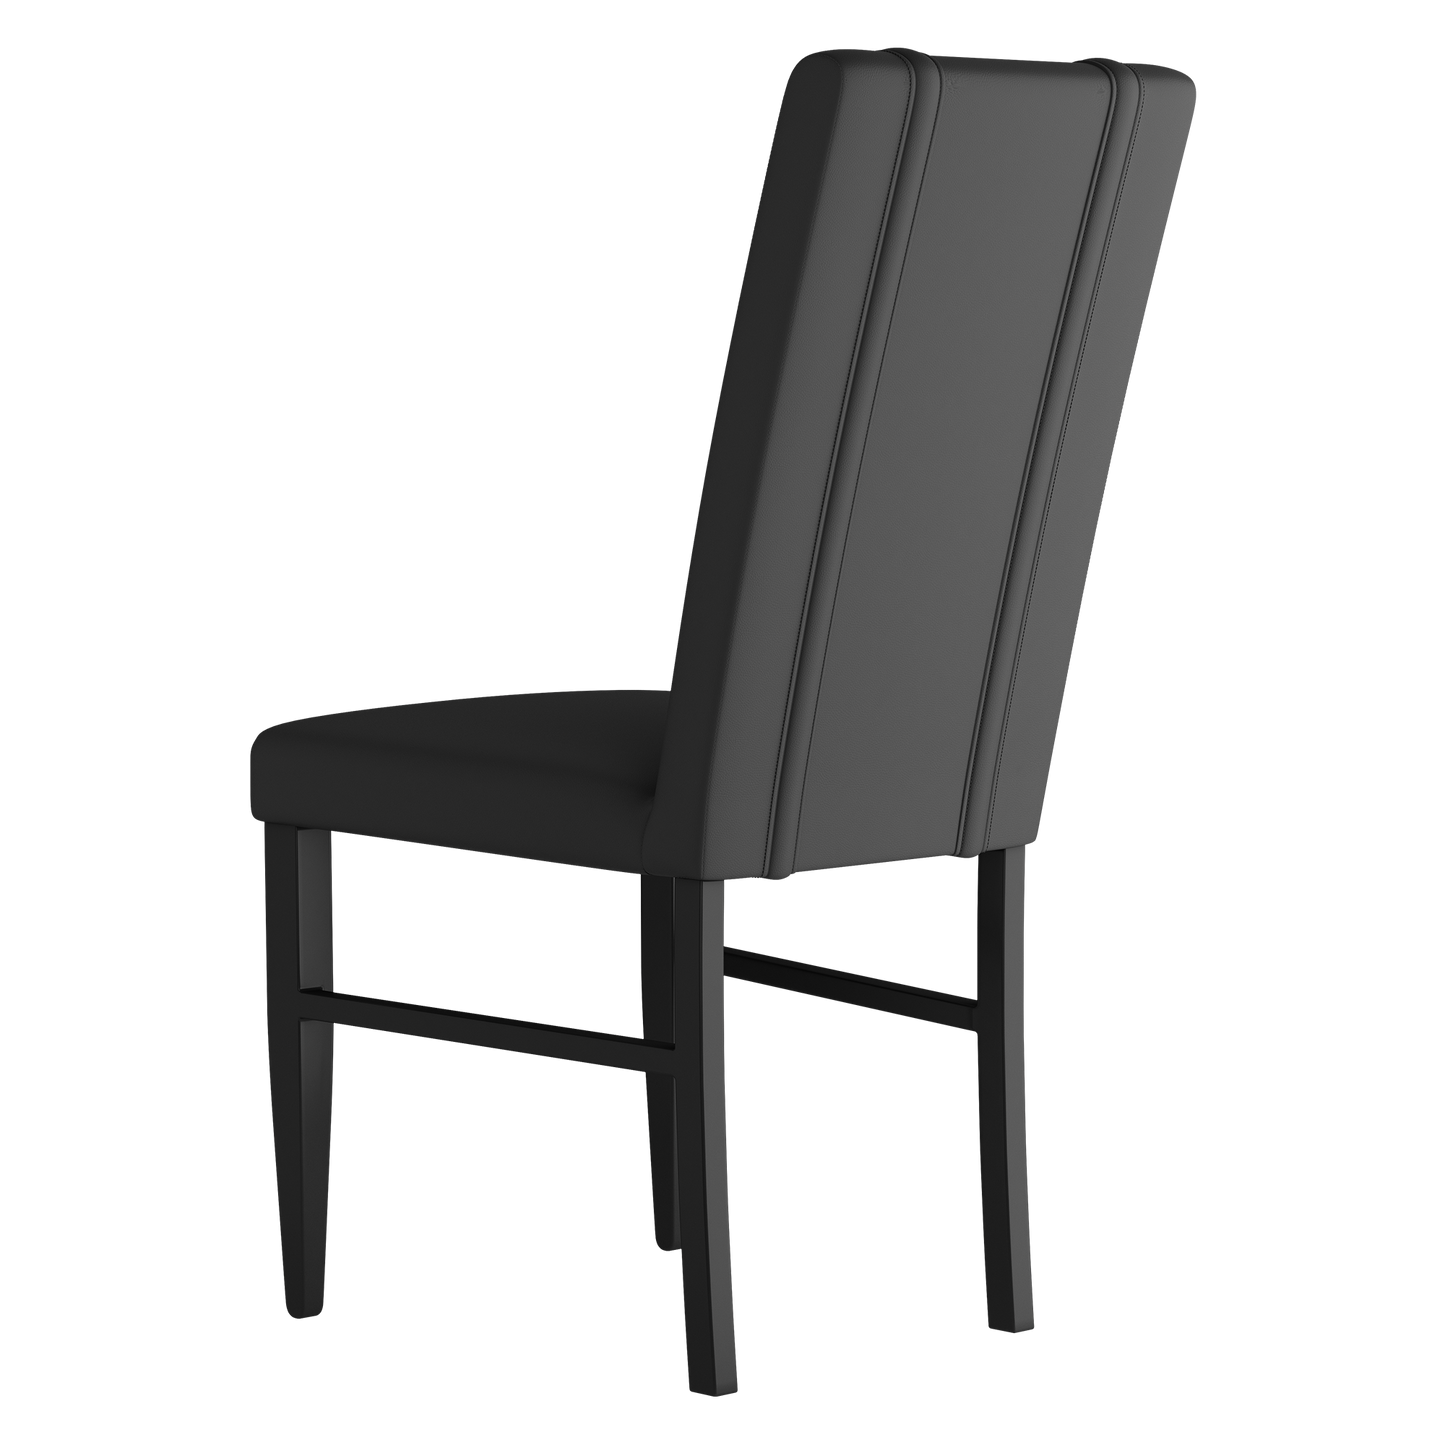 Side Chair 2000 with Seattle Kraken Alternate Logo Set of 2